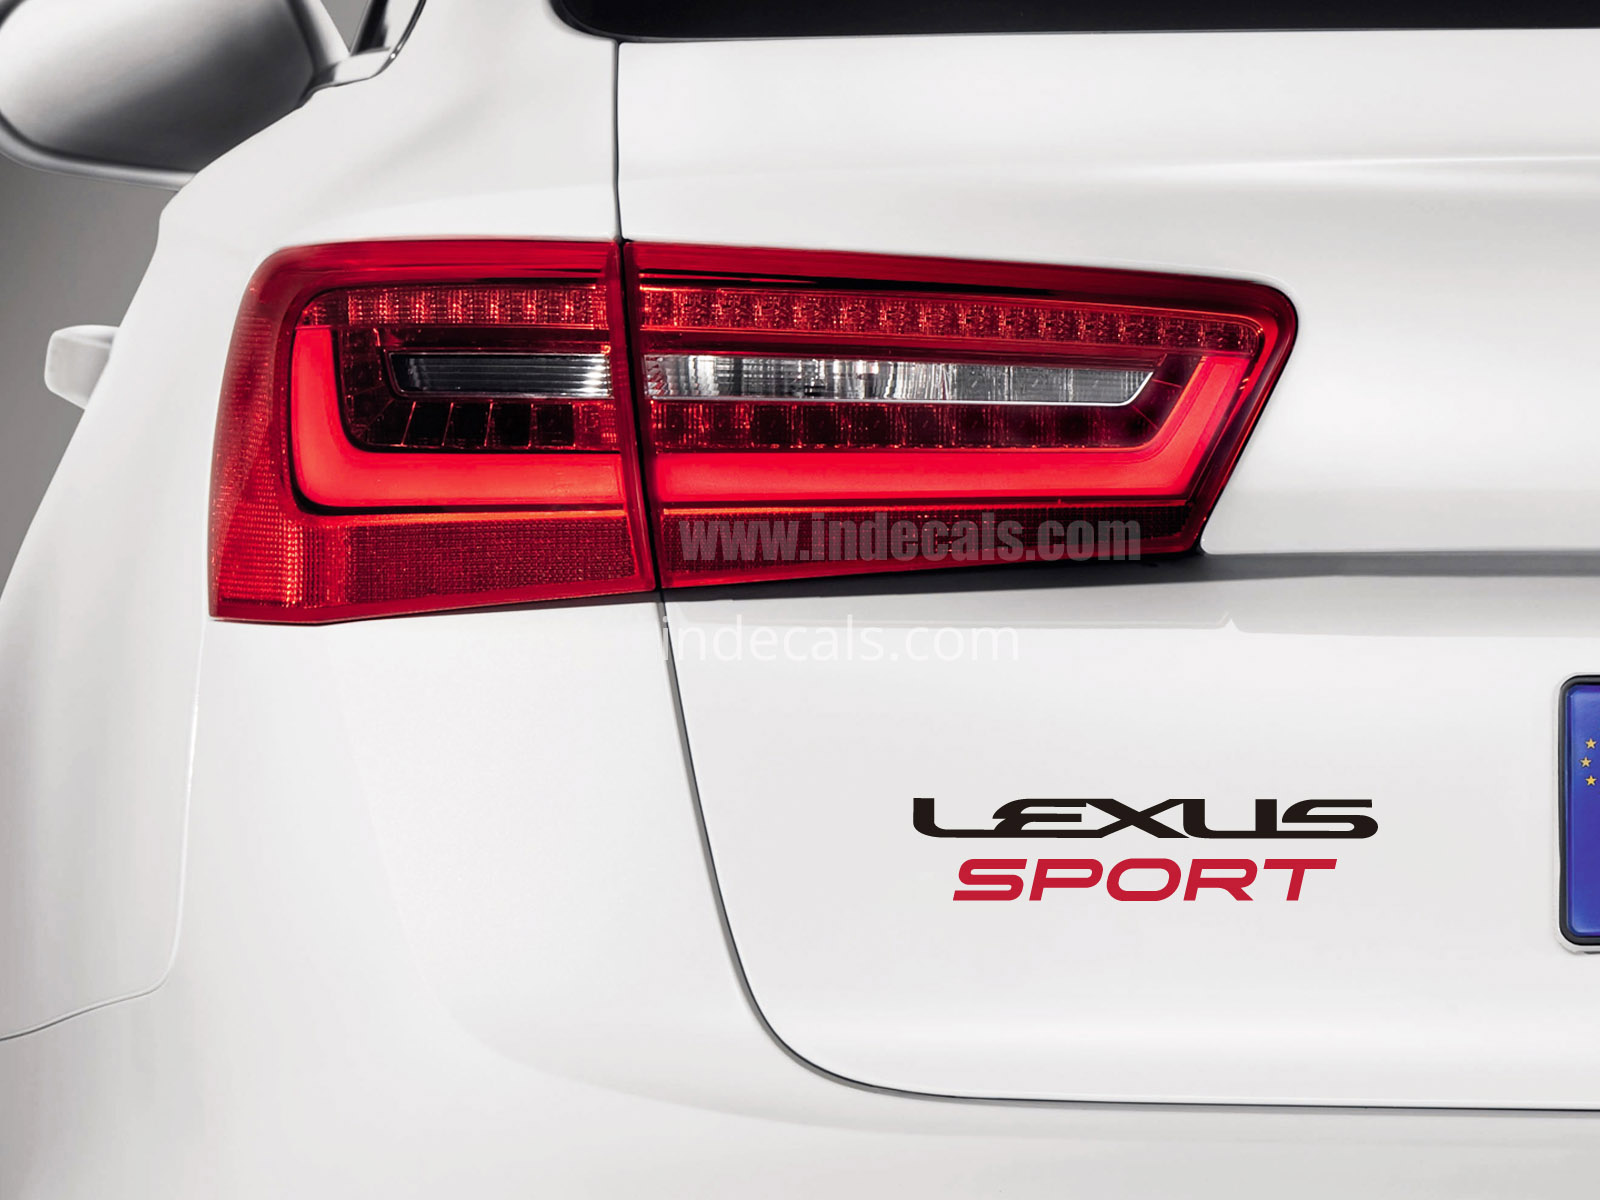 1 x Lexus Sports Sticker for Trunk - Black & Red